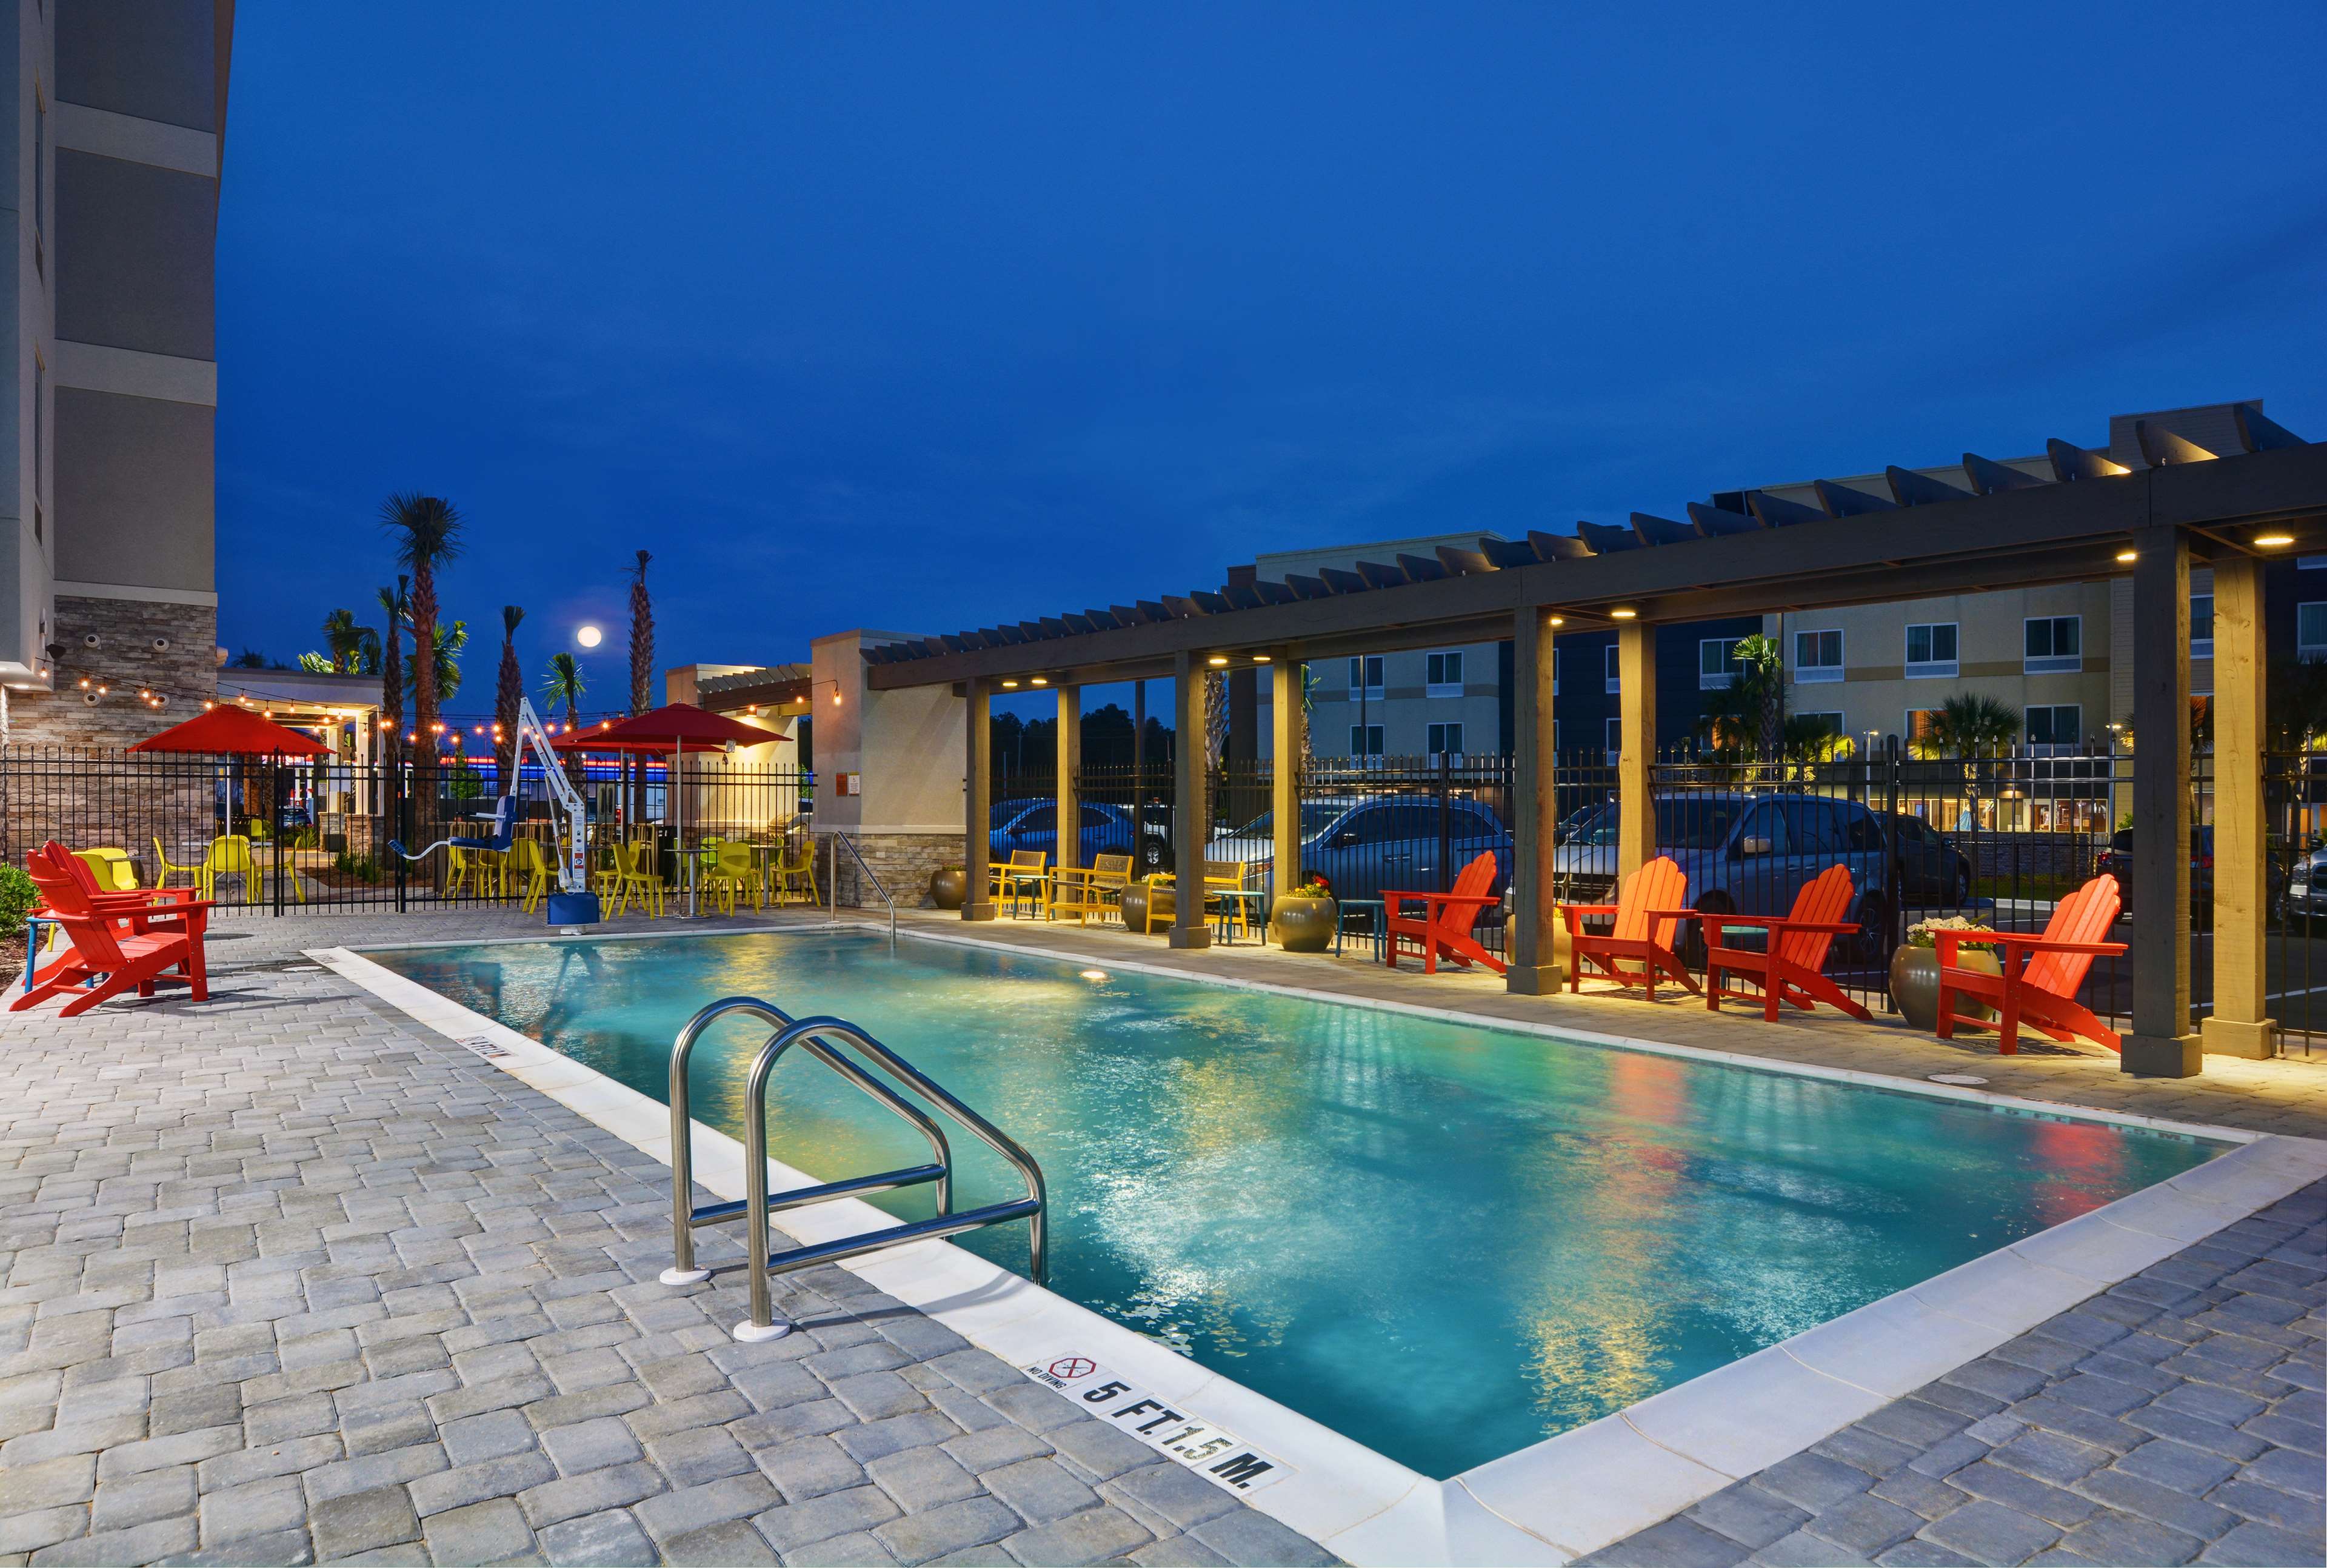 Home2 Suites by Hilton Panama City Beach in Panama City Beach, FL